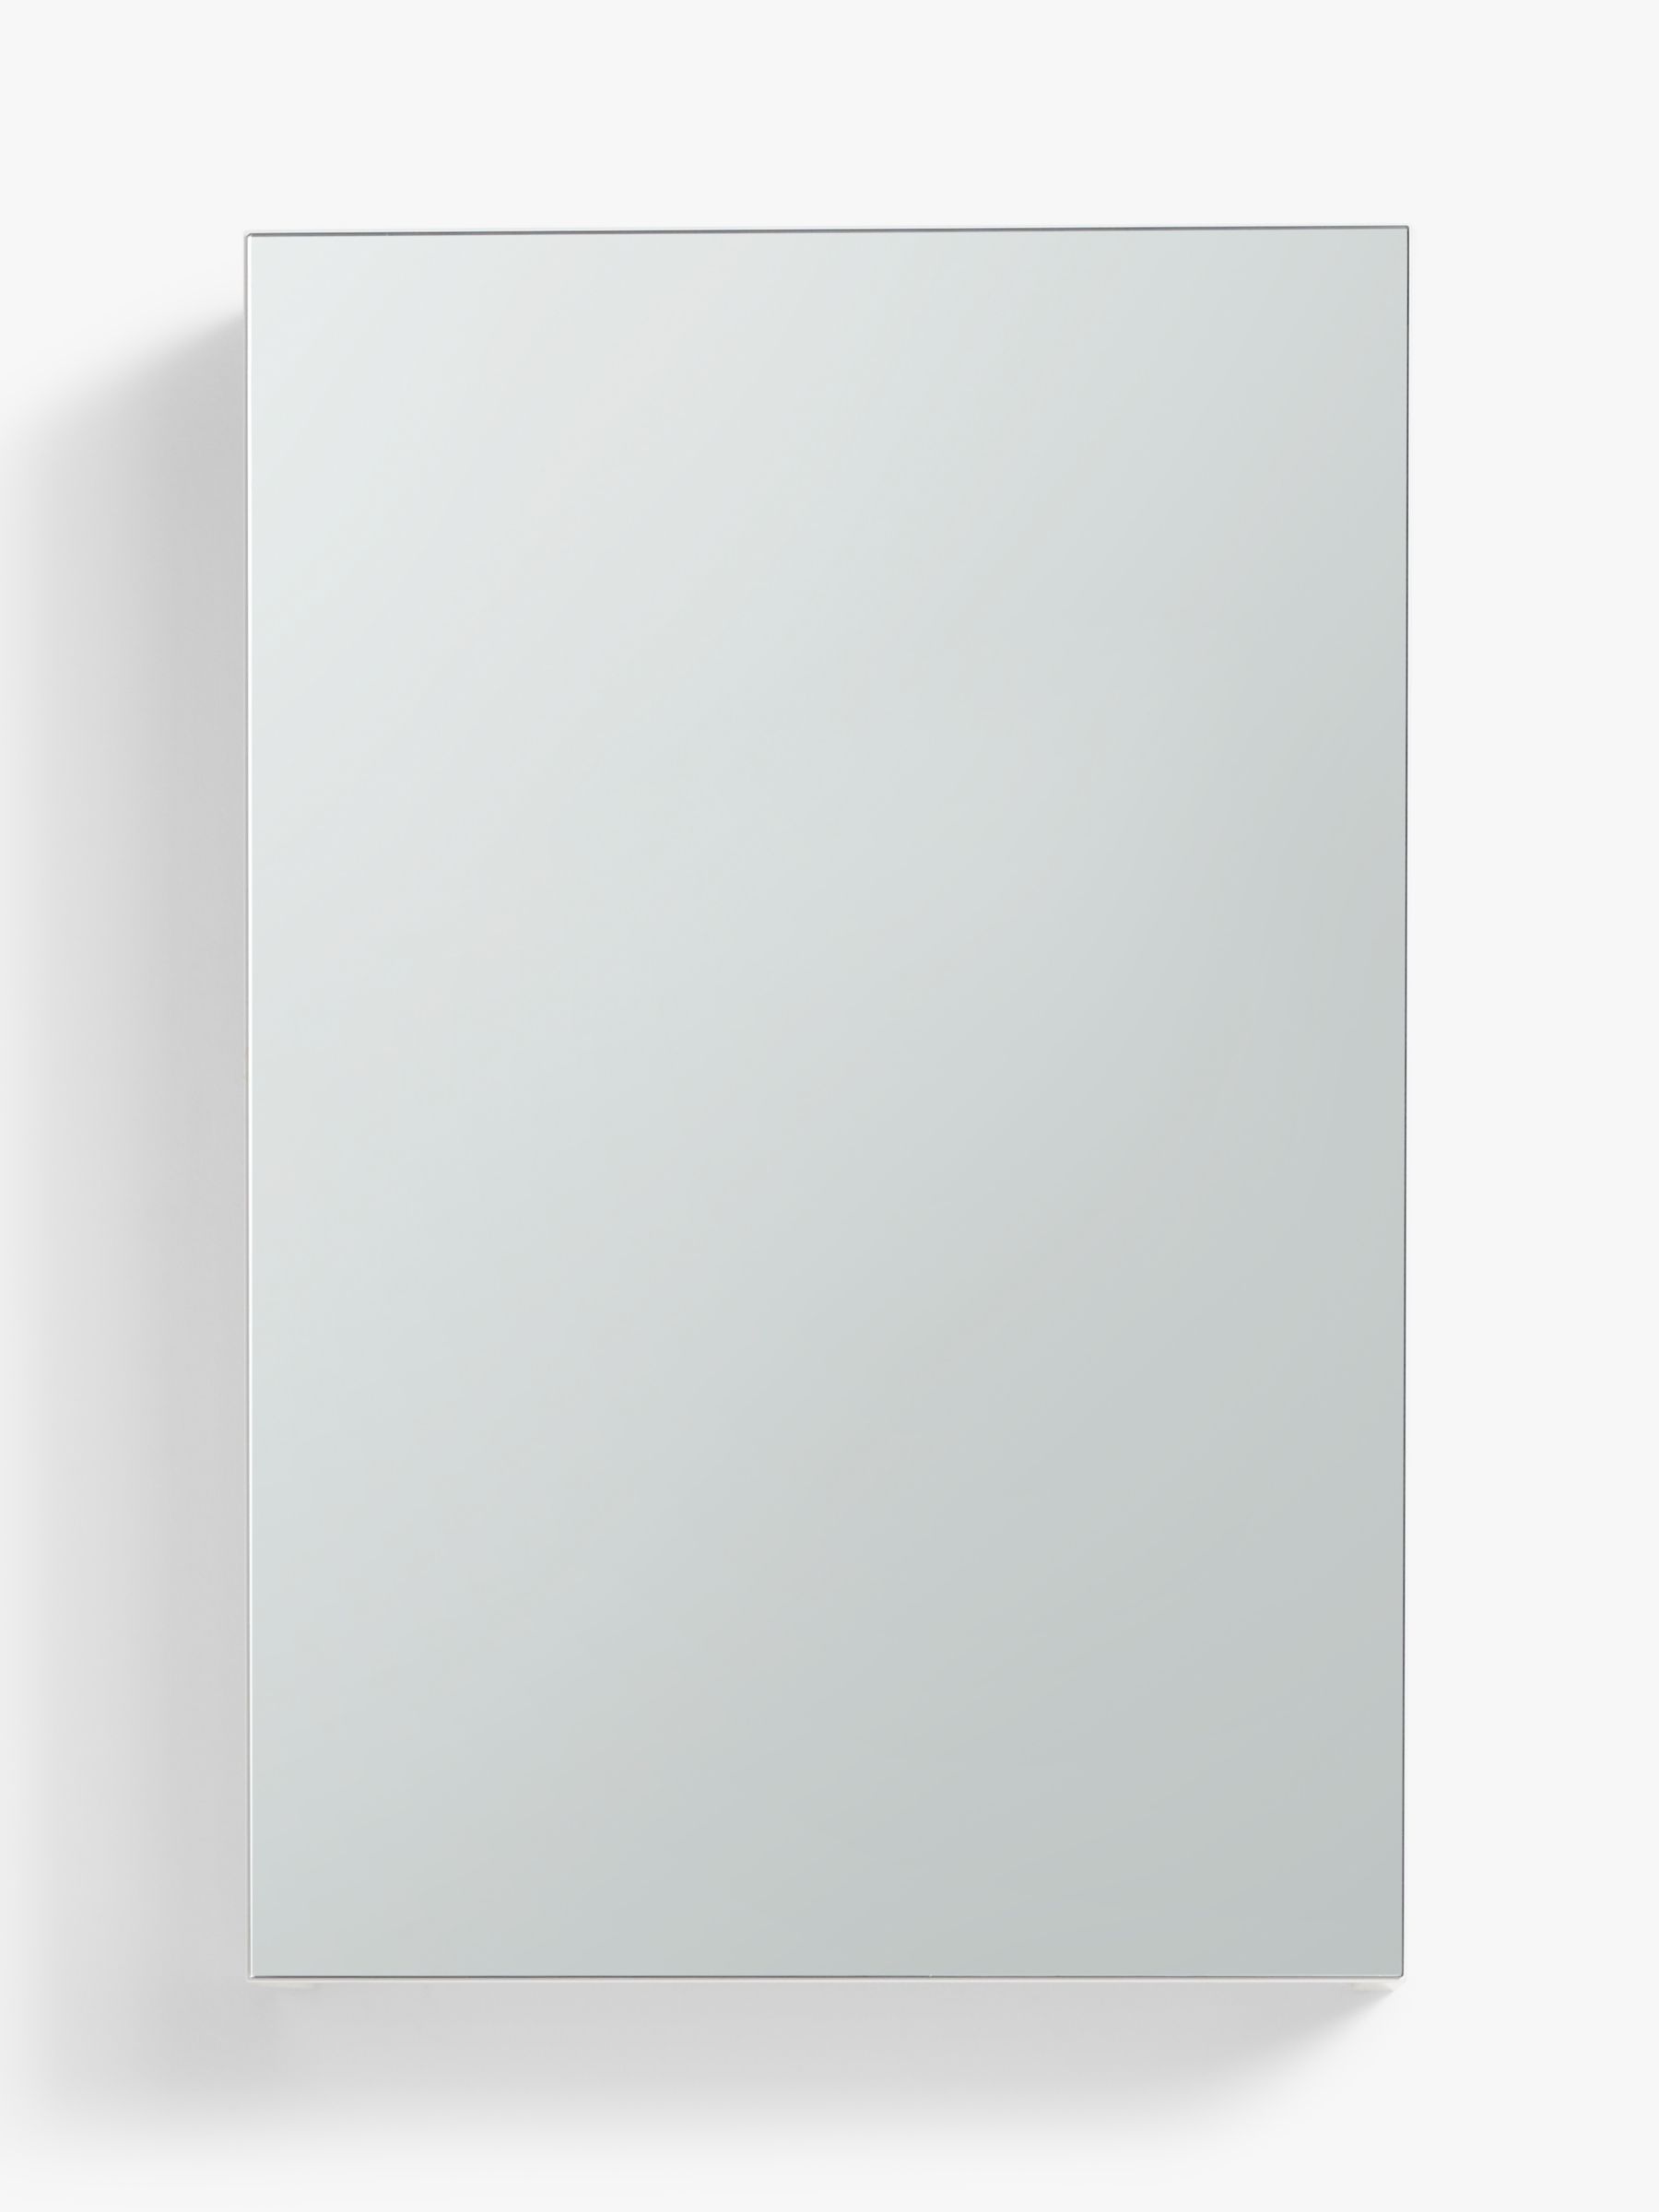 Photo of John lewis white gloss single mirrored bathroom cabinet